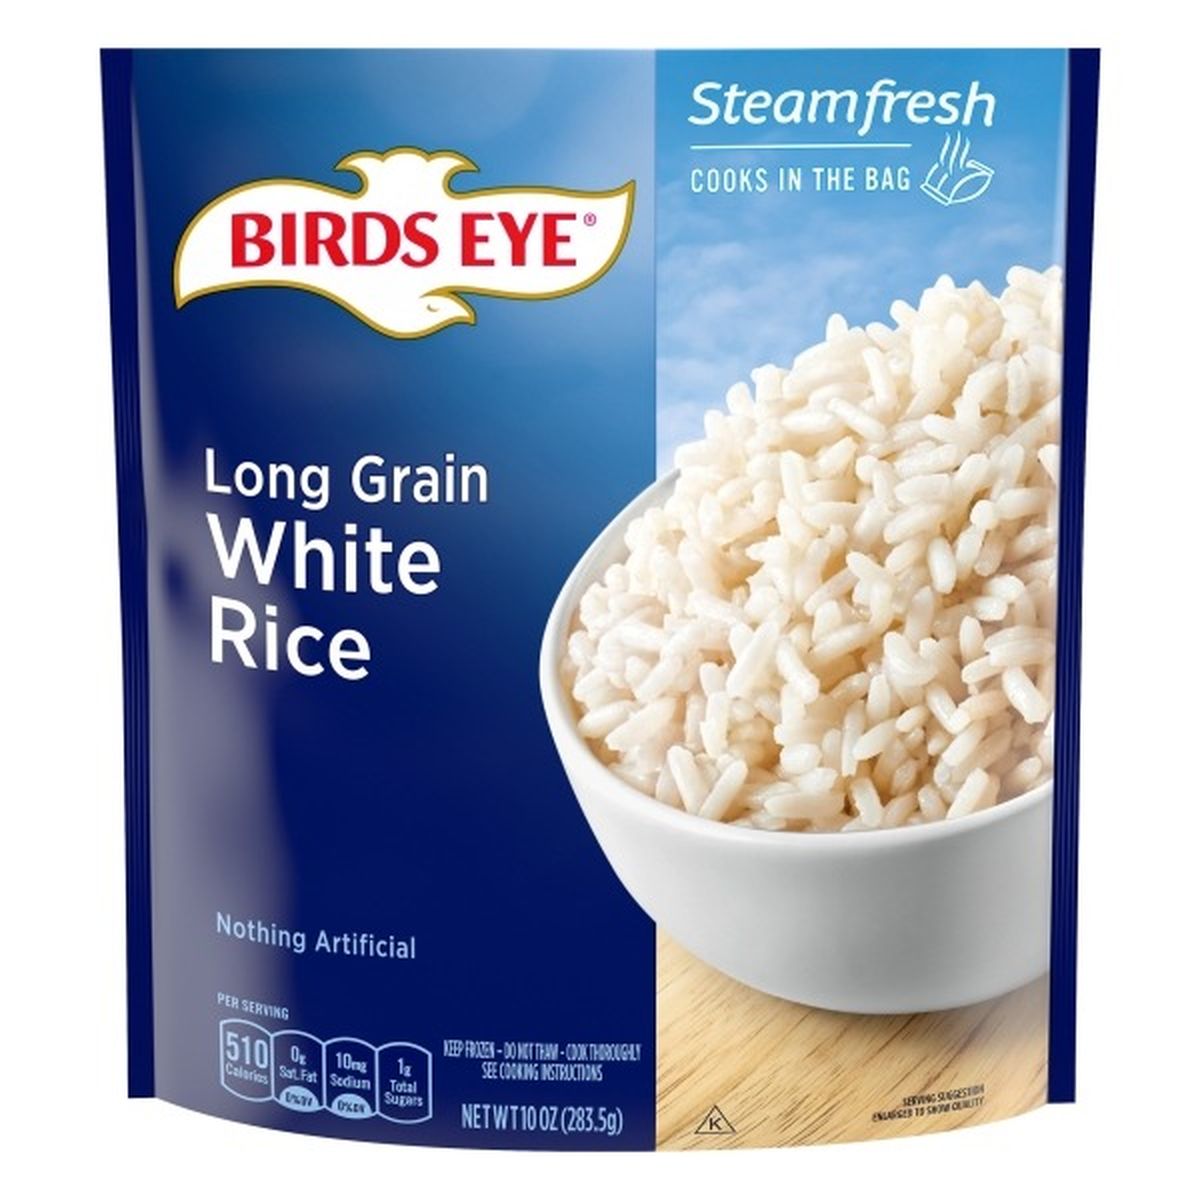 Calories in Birds Eye White Rice, Long Grain